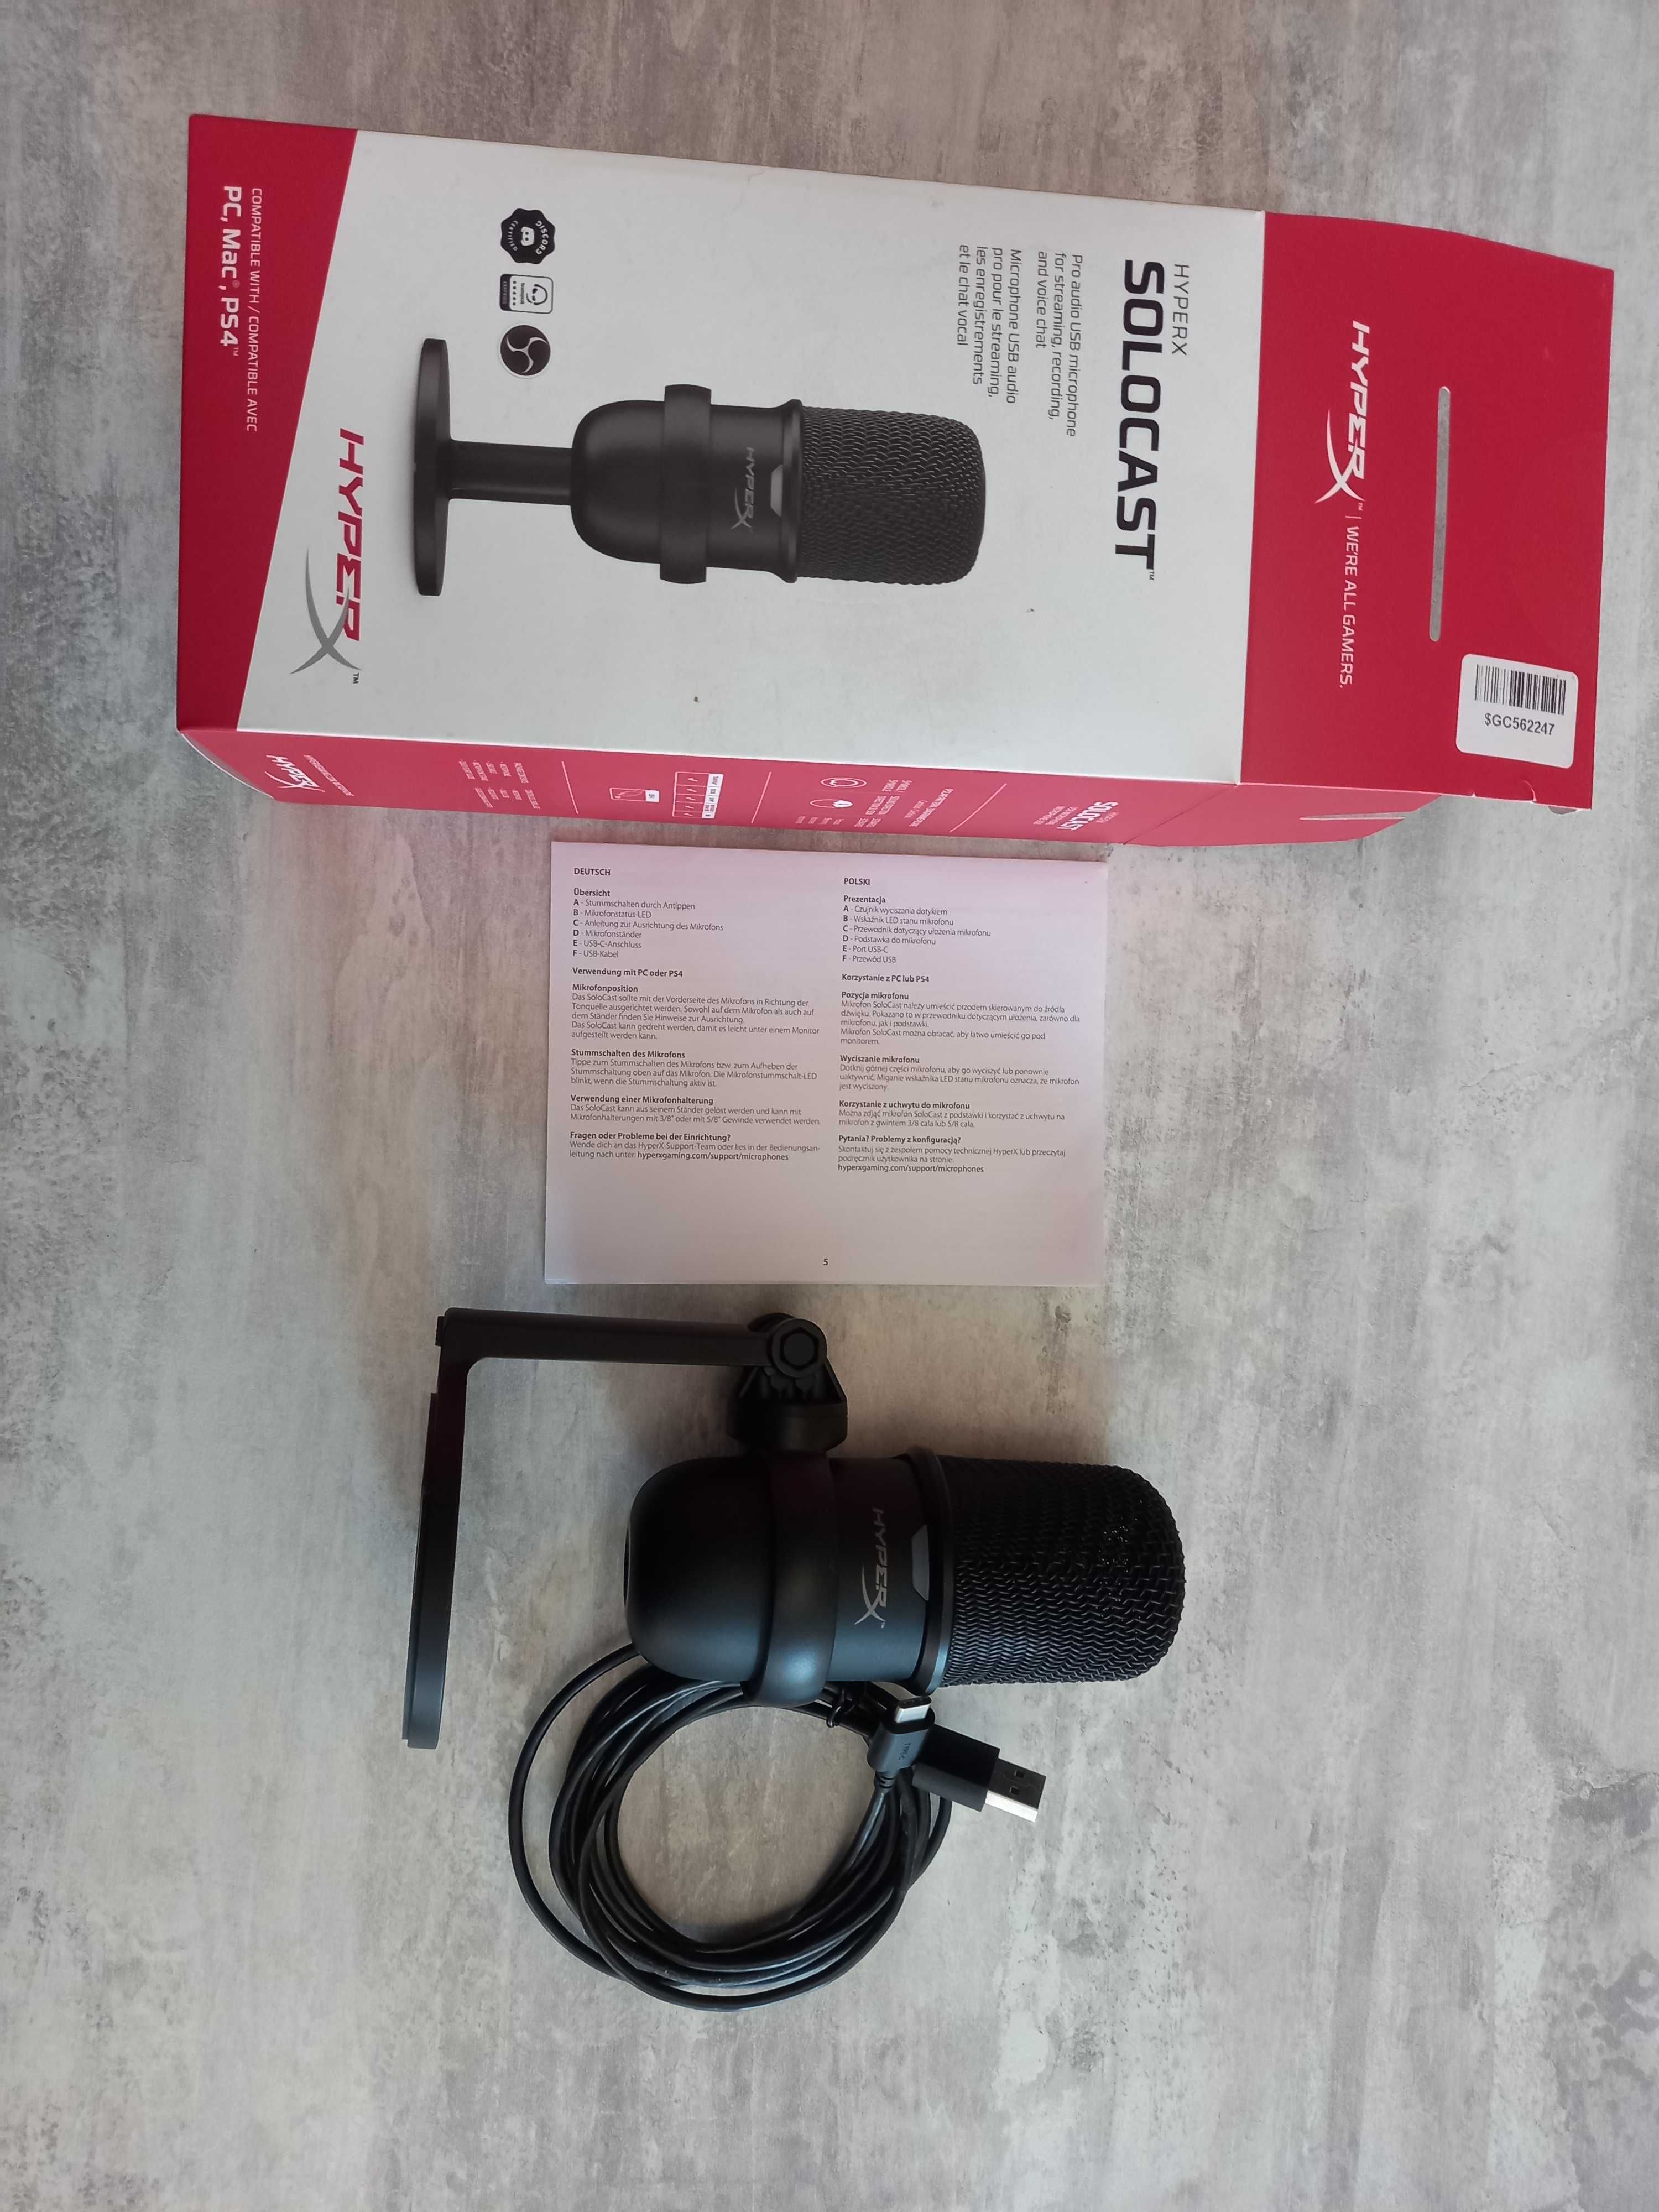 Новенький Мікрофон HyperX SoloCast + пантограф і поп фільтр